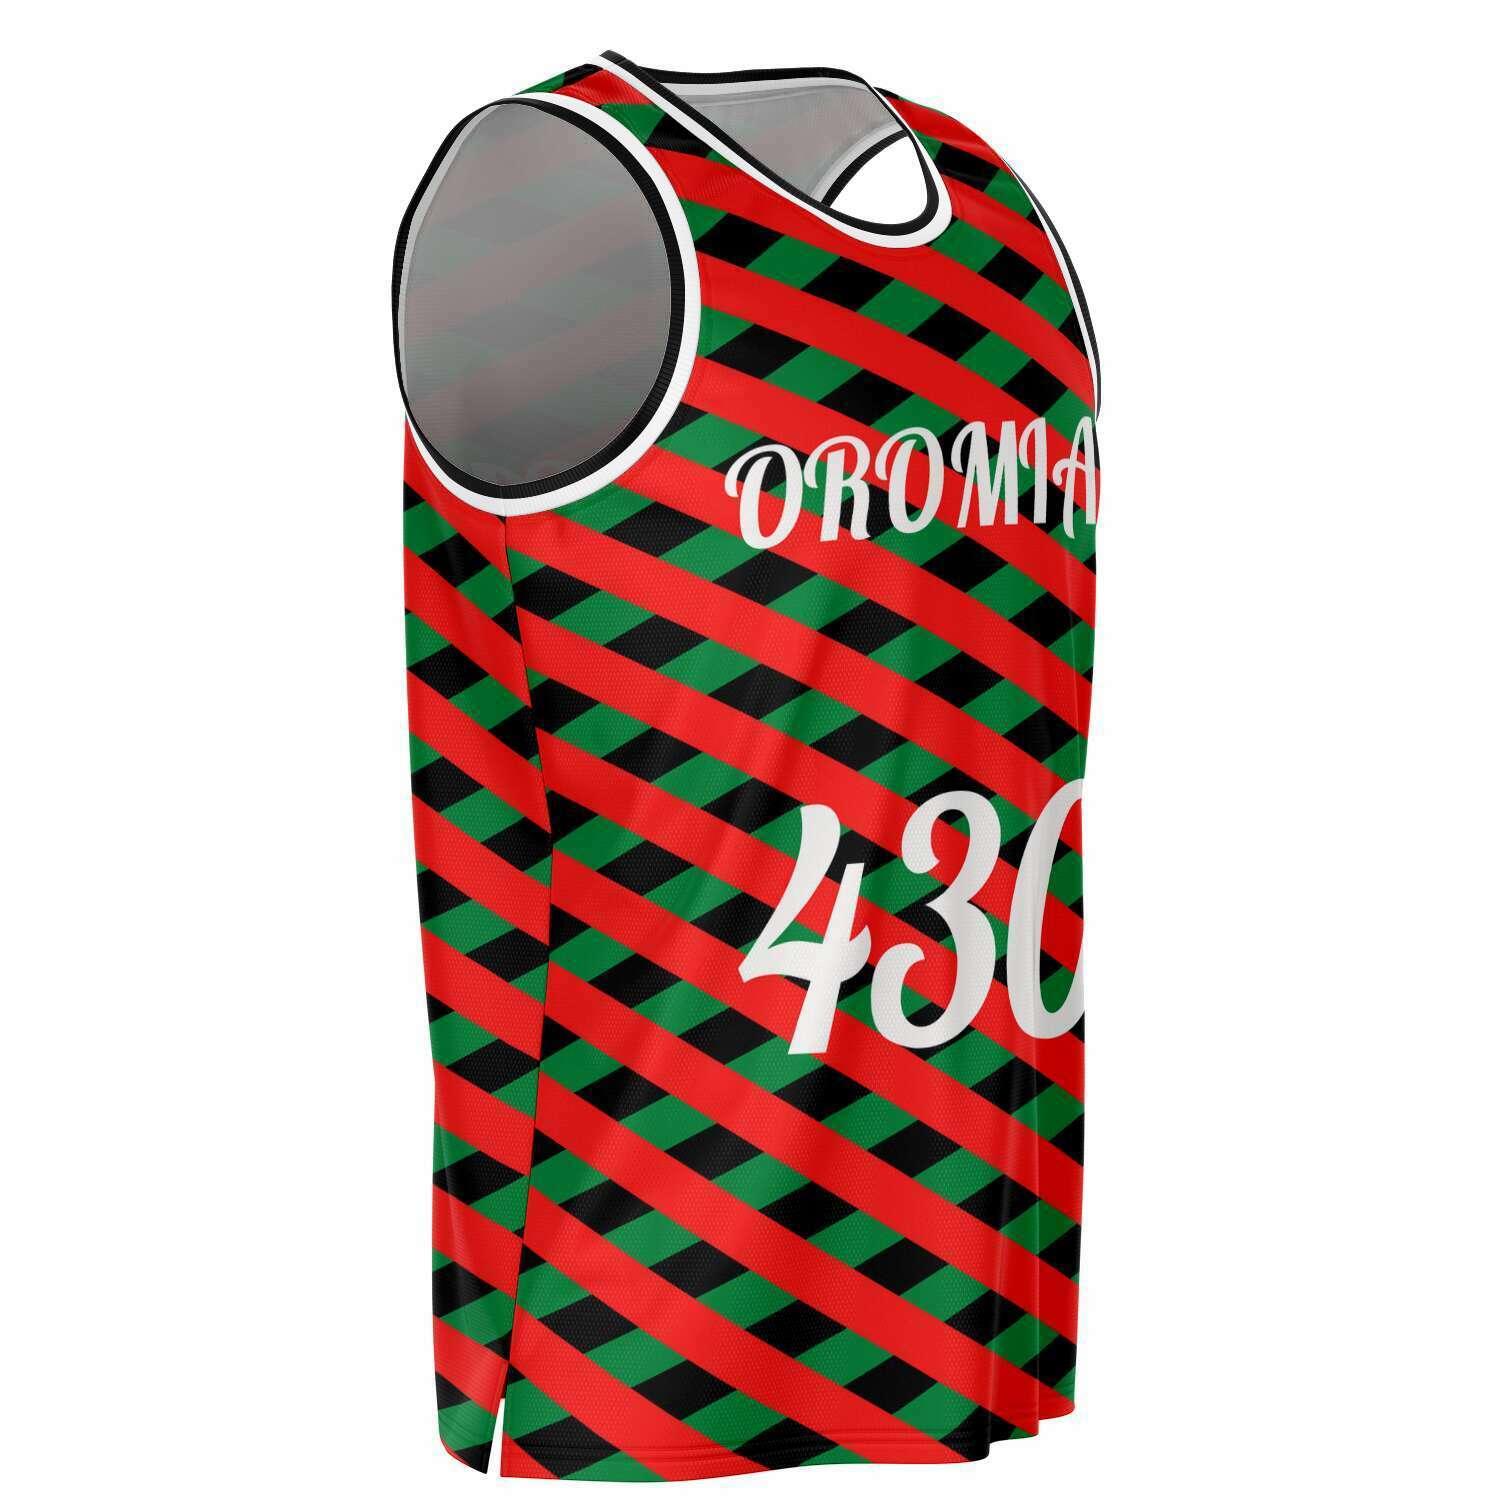 Oromia Basketball Jersey - S